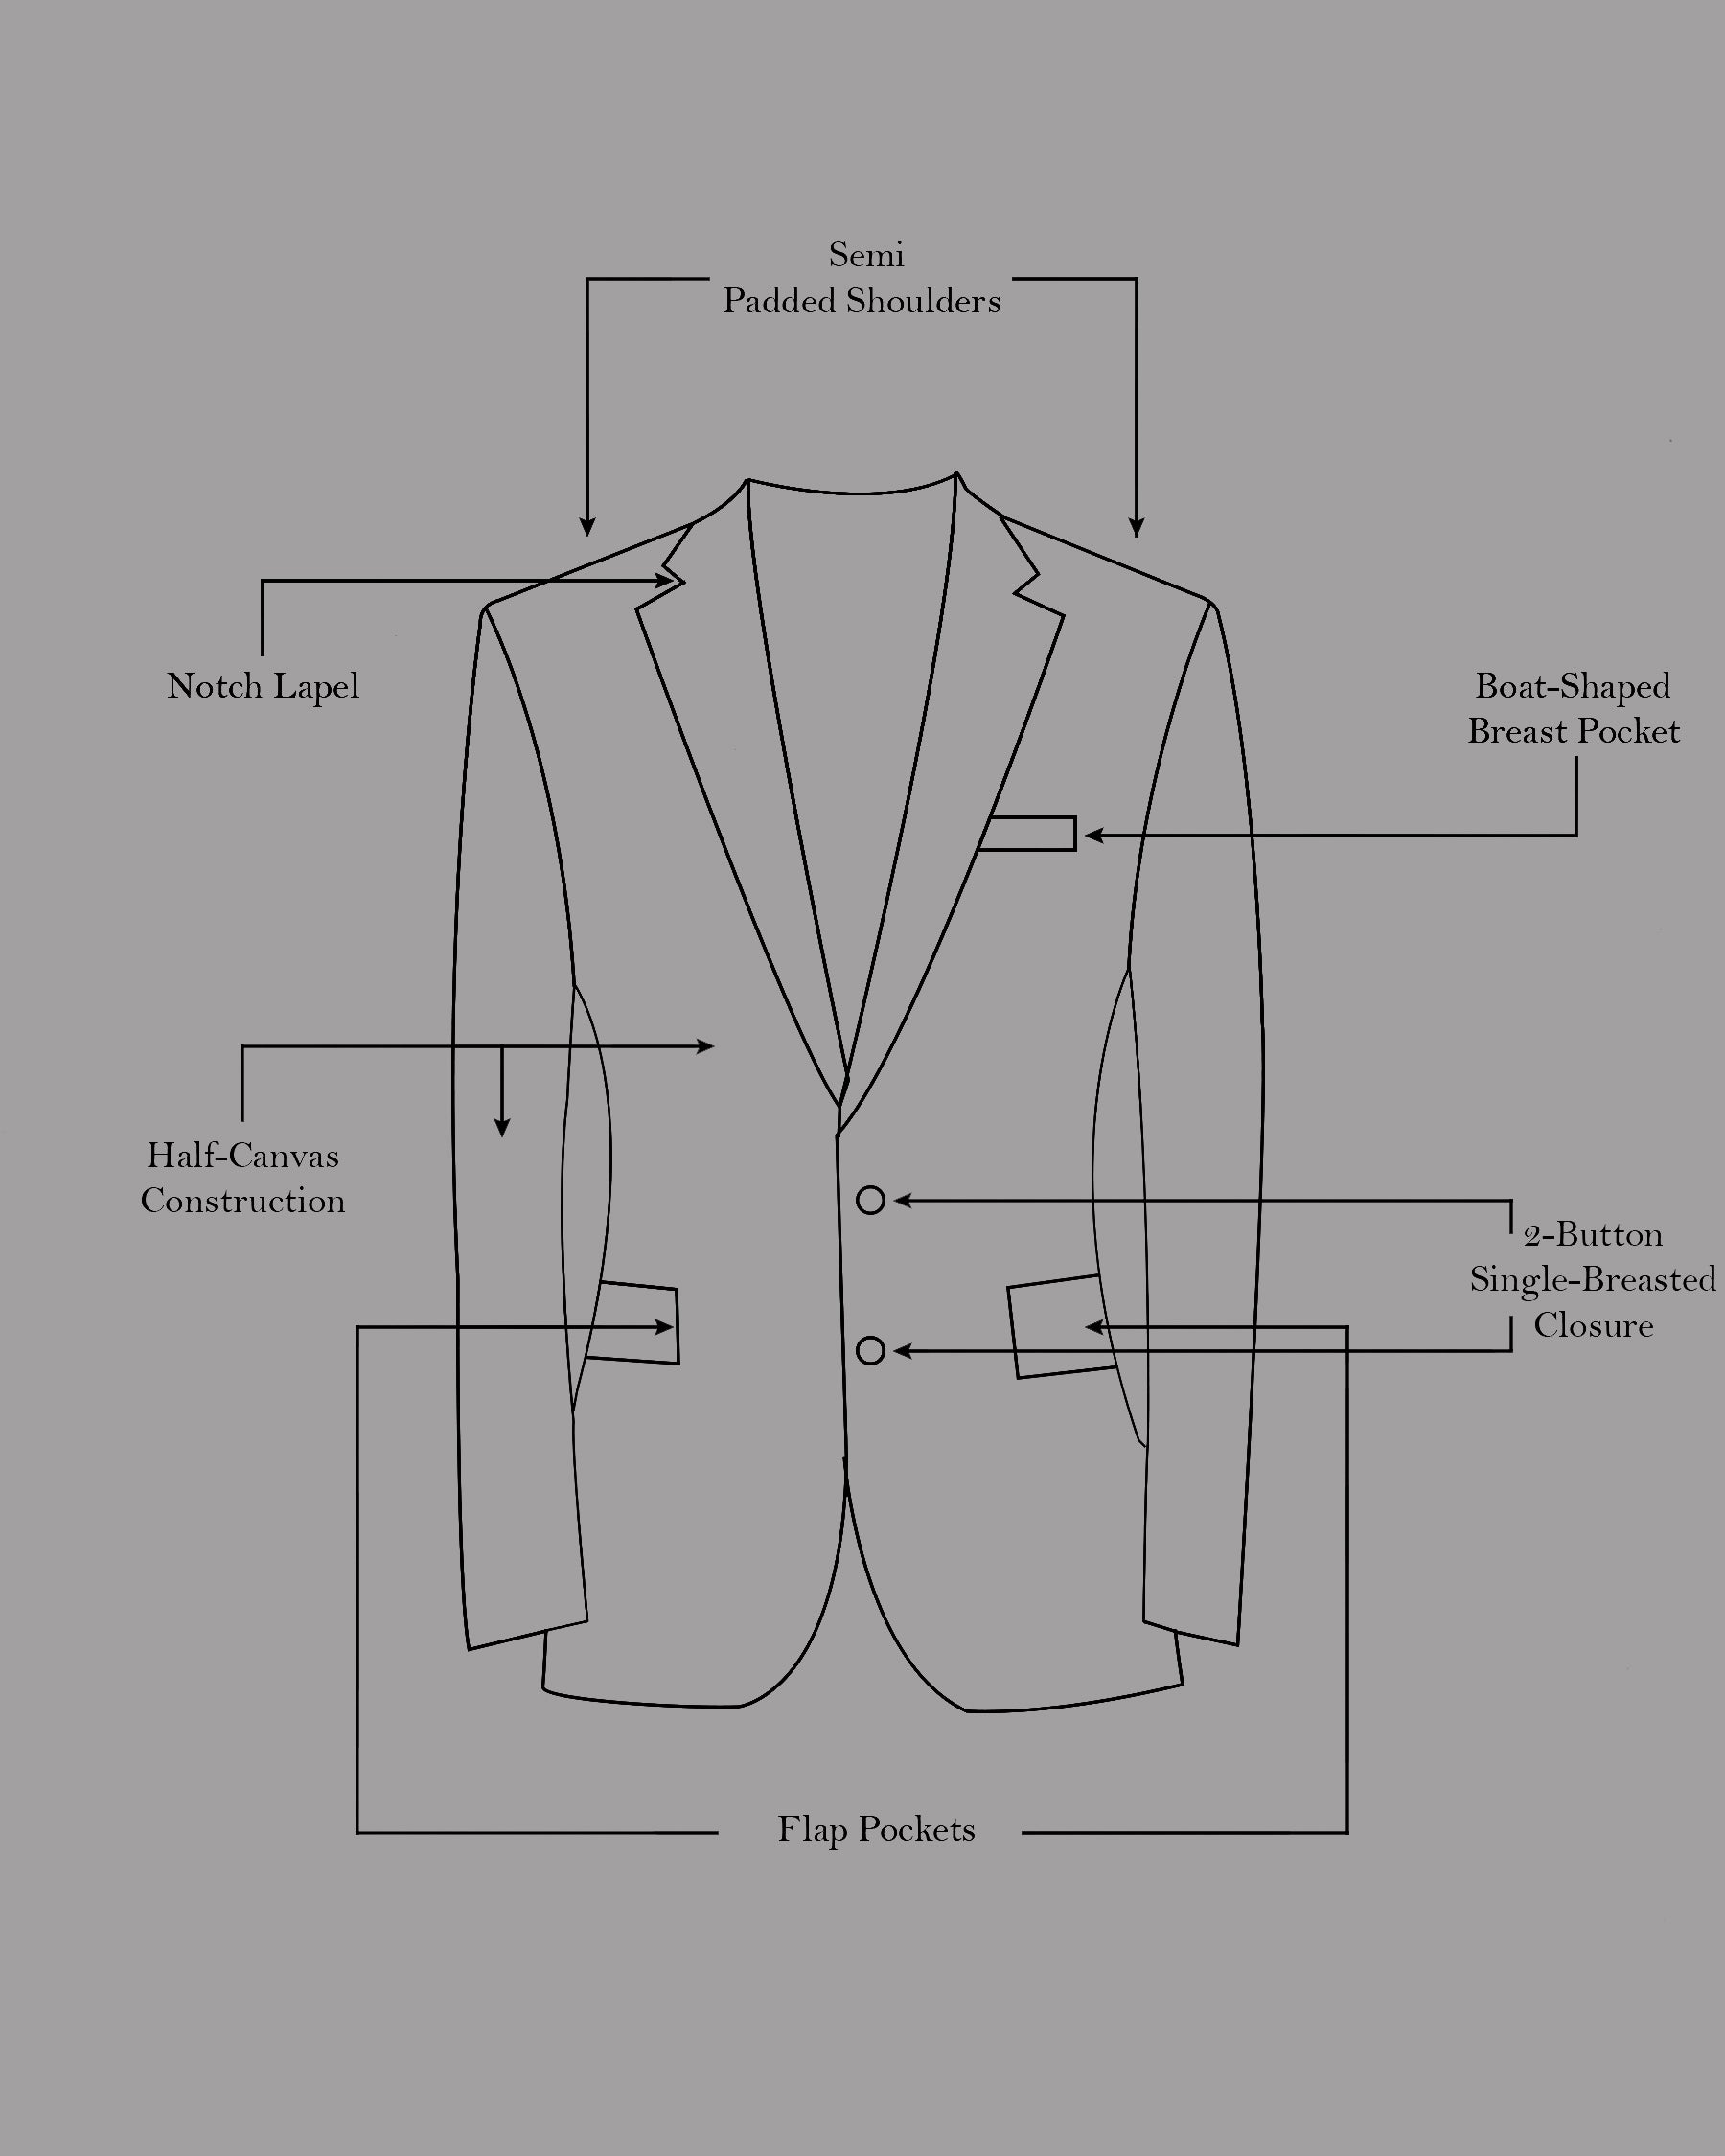 Charcoal Brown Plaid Suit